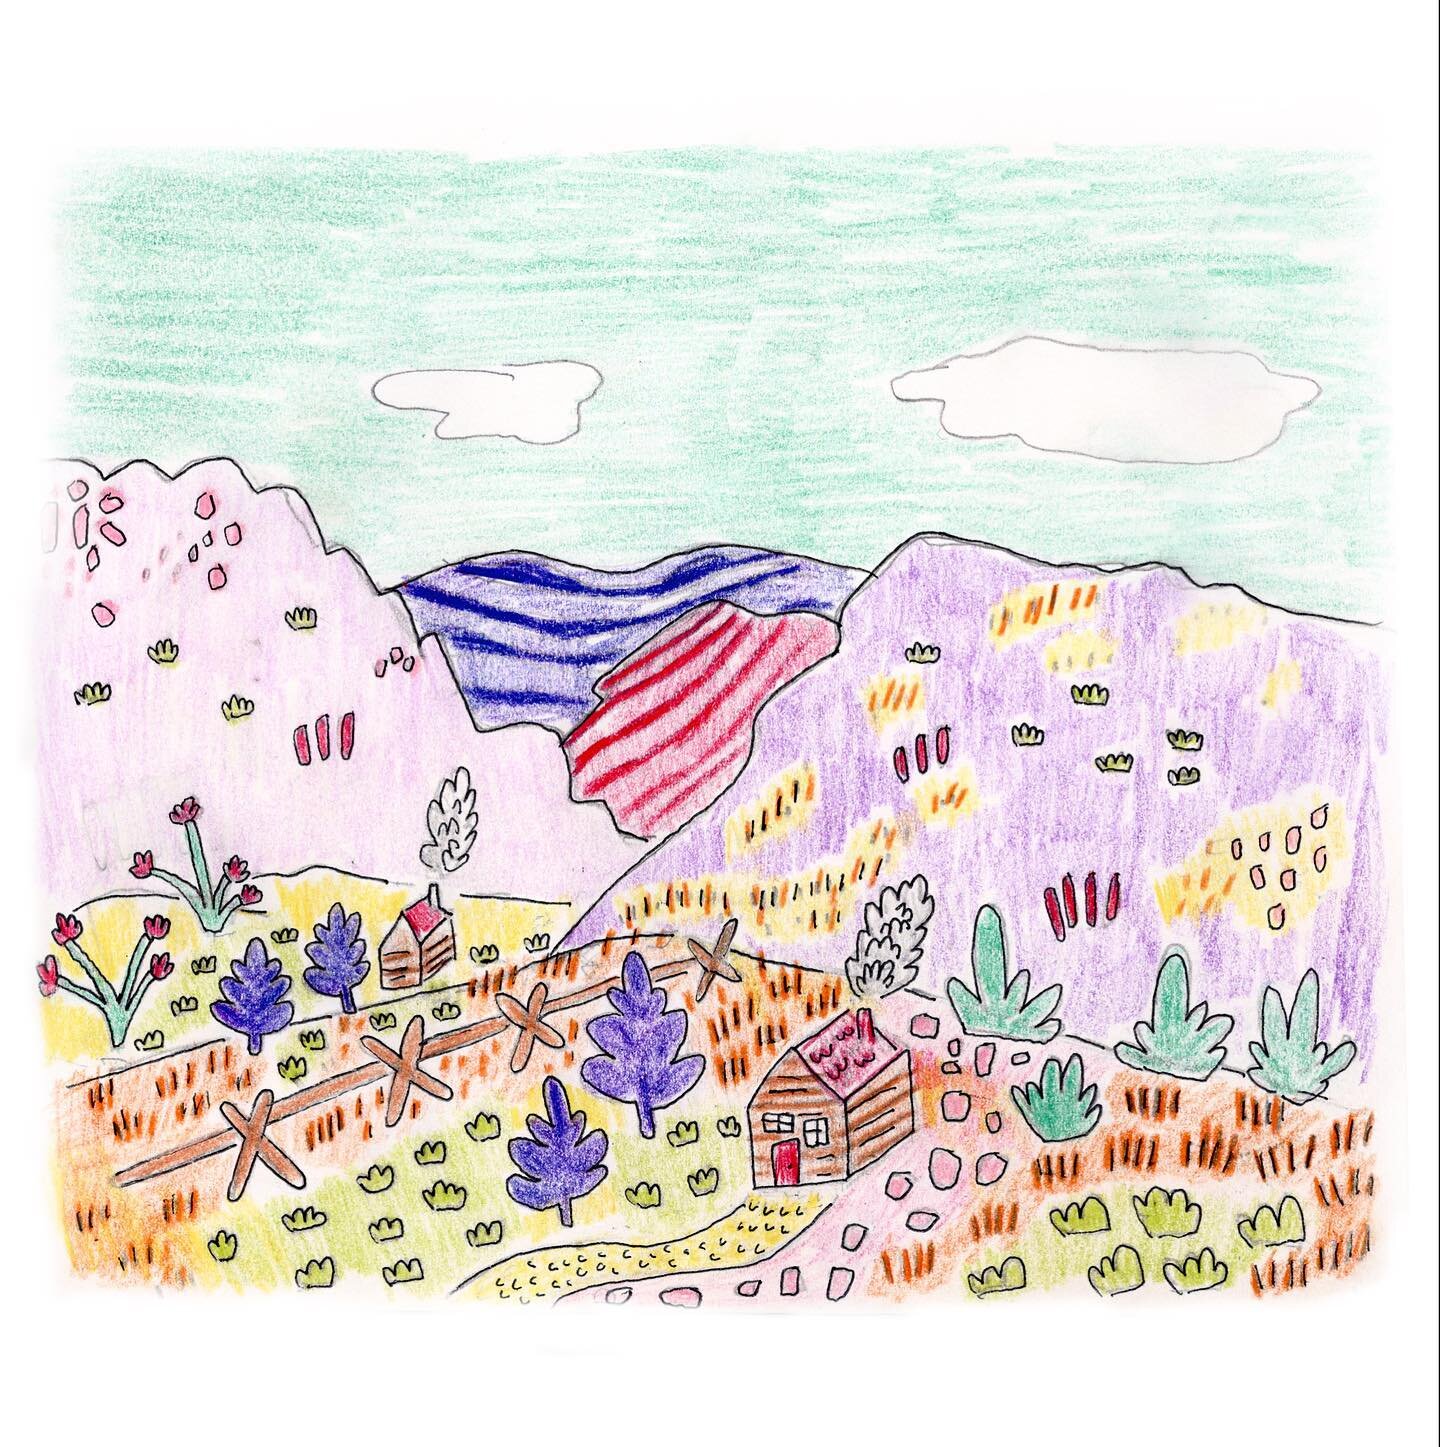 A valley home 🖤

#illustration #drawing #landscape #coloredpencil #heneferutah